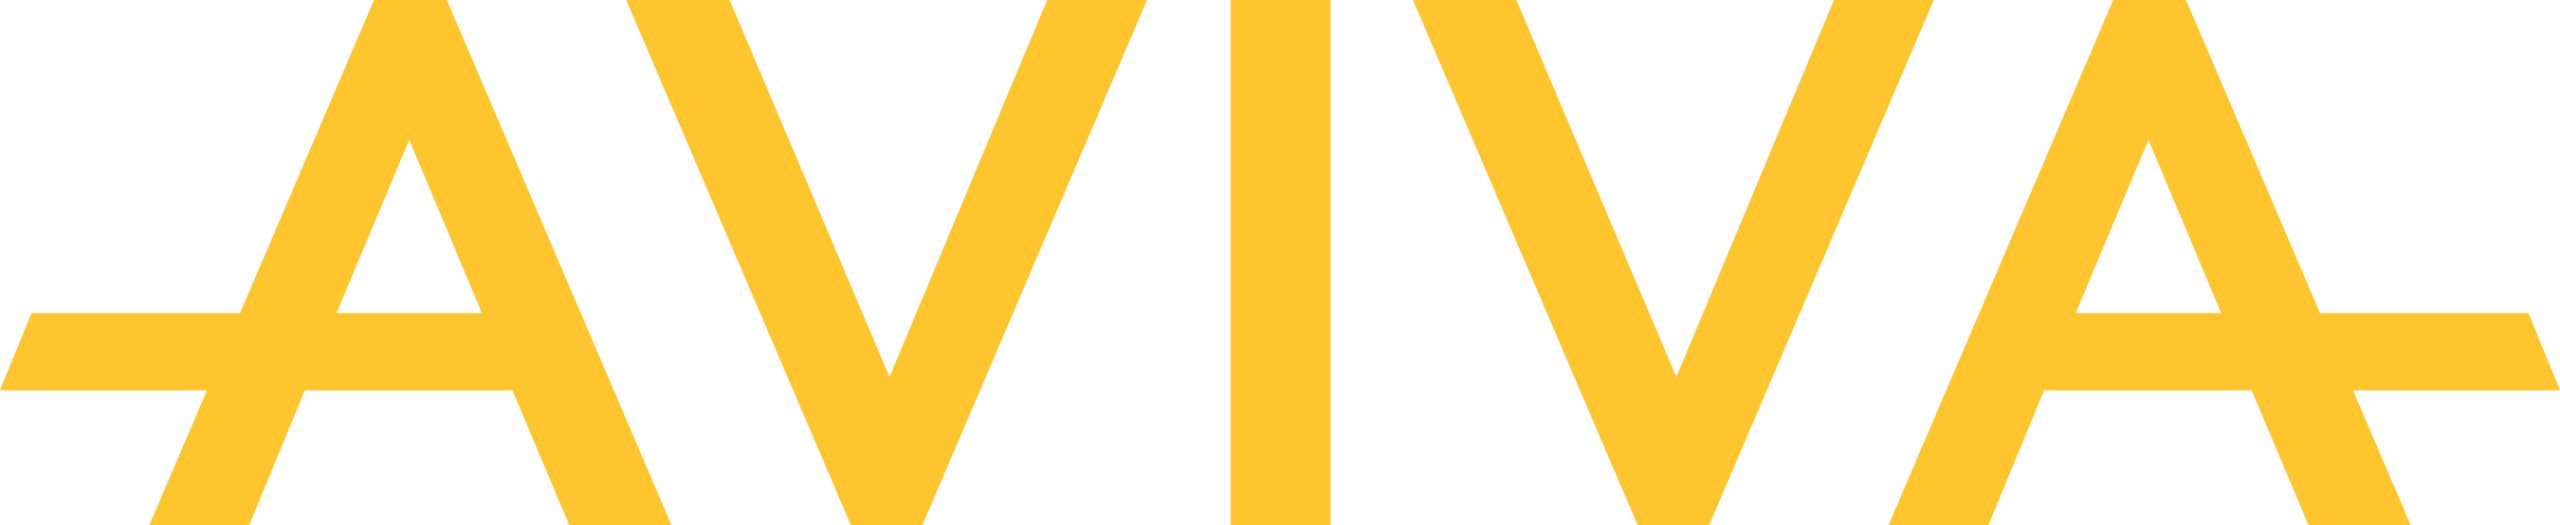 AVIVA Logo